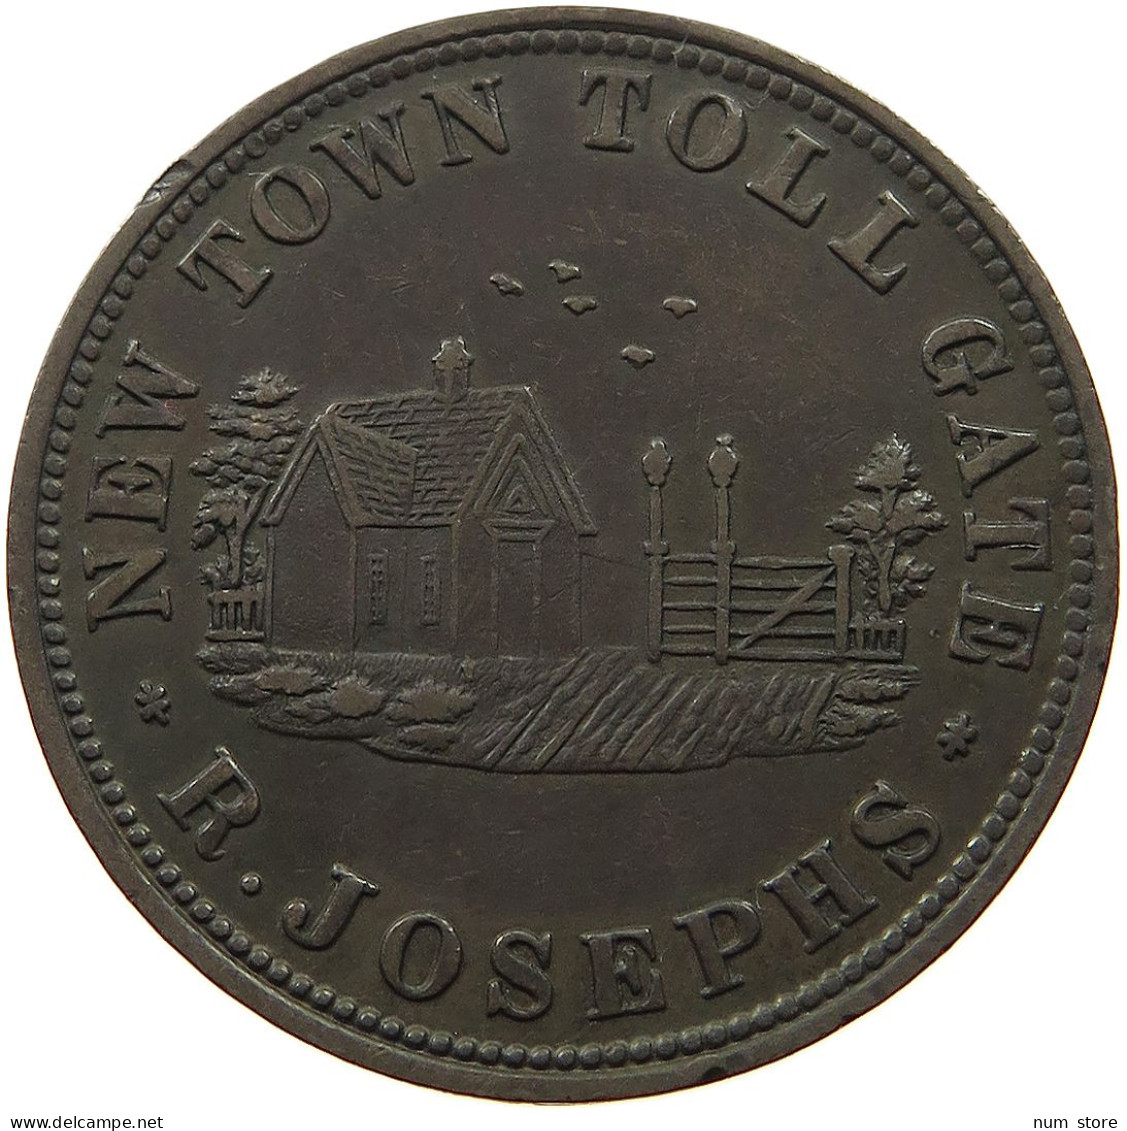 AUSTRALIA HALF PENNY TOKEN 1855 Victoria (1837-1901) R. JOSEPHS NEW TOWN TOLL GATE TASMANIA #t059 0211 - ½ Penny